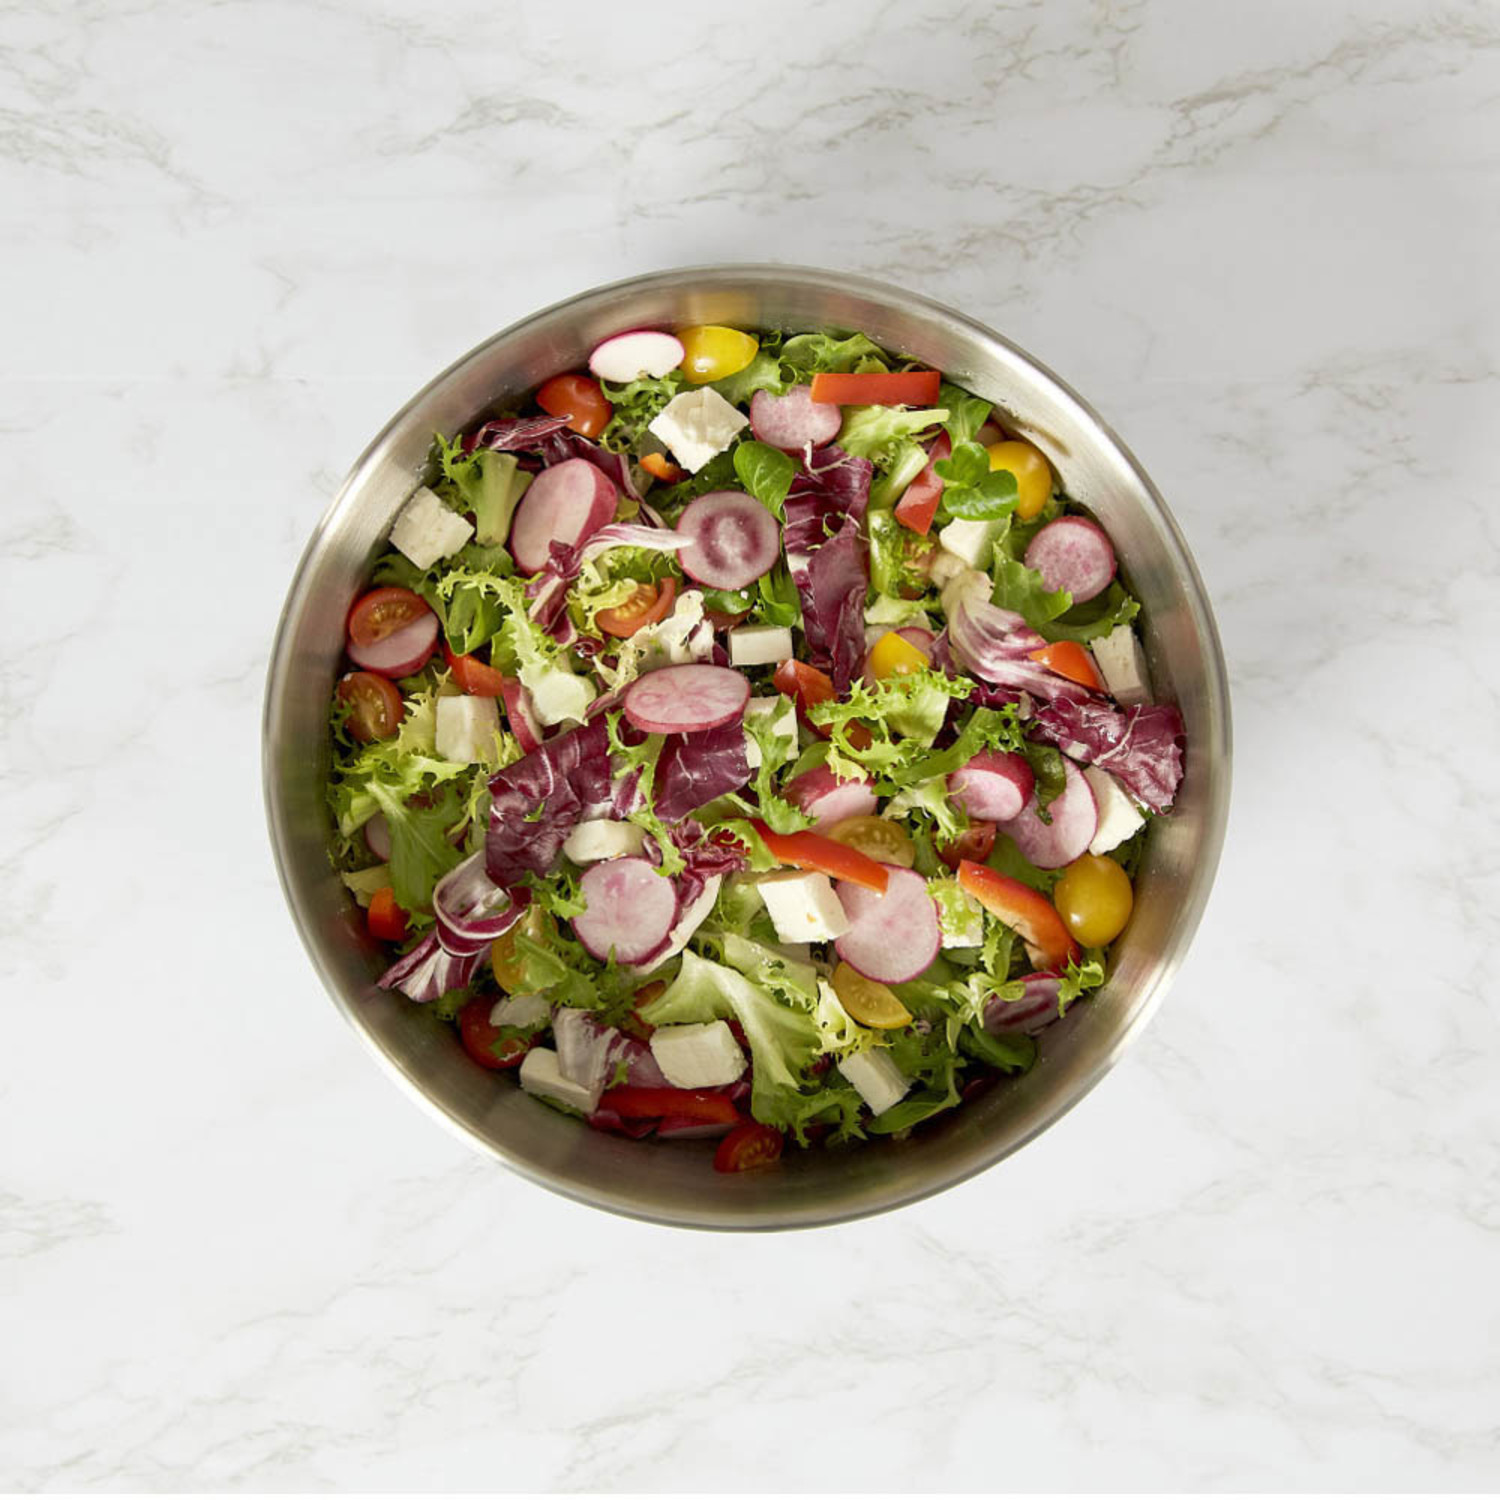 Zyliss, Kitchen, New Zyliss Salad Spinner